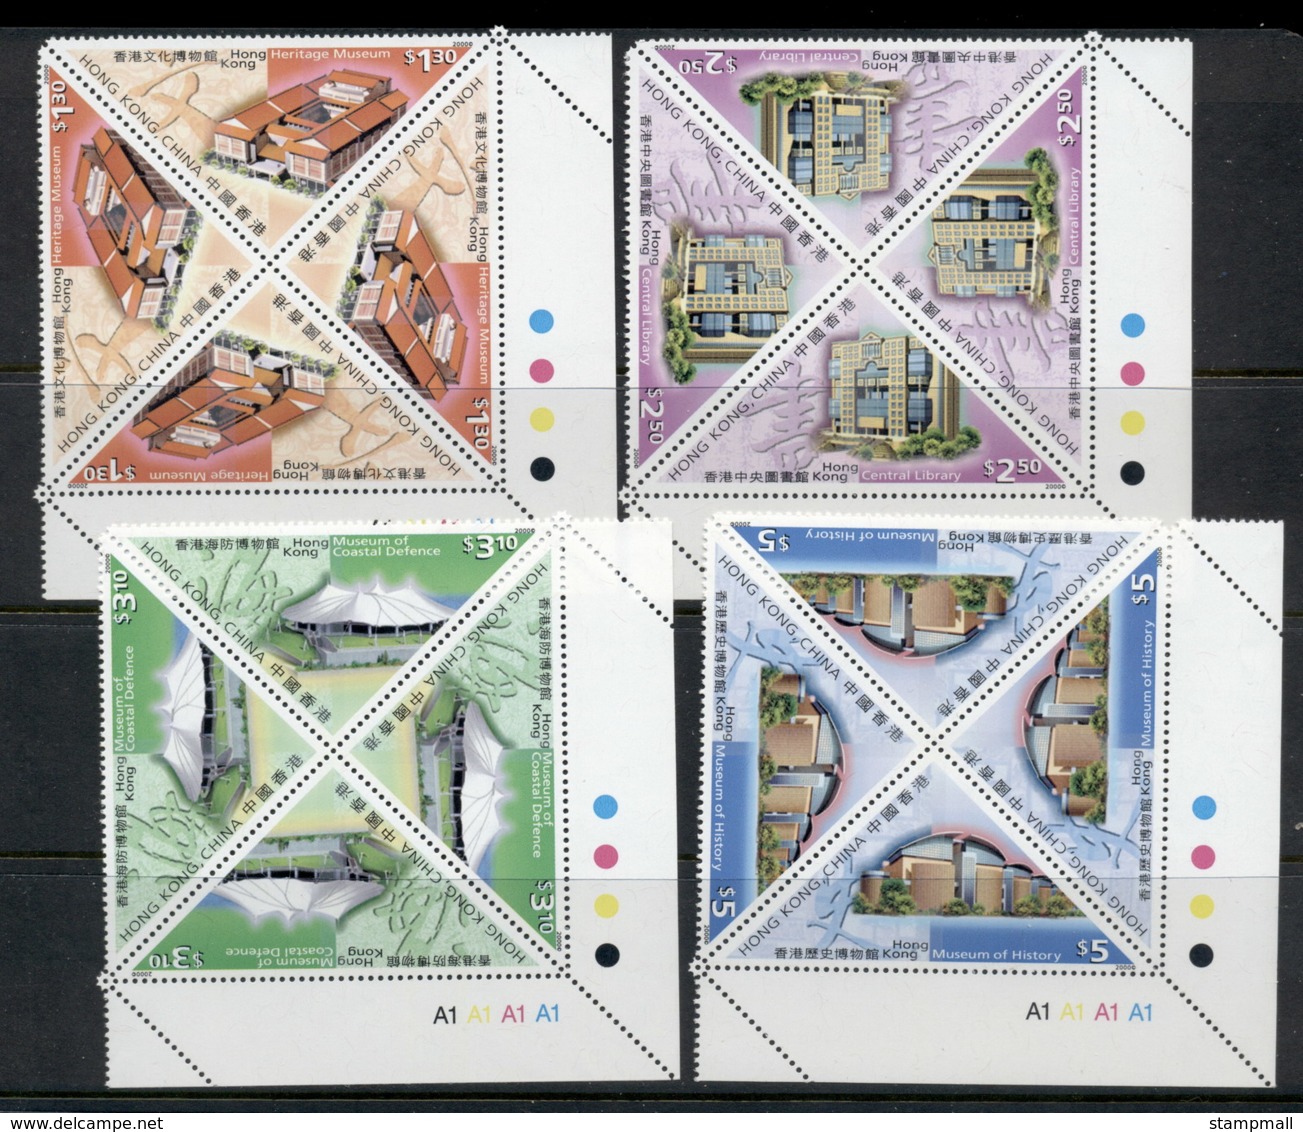 Hong Kong 2000 Museums & Libraries Blk4 MUH - Unused Stamps